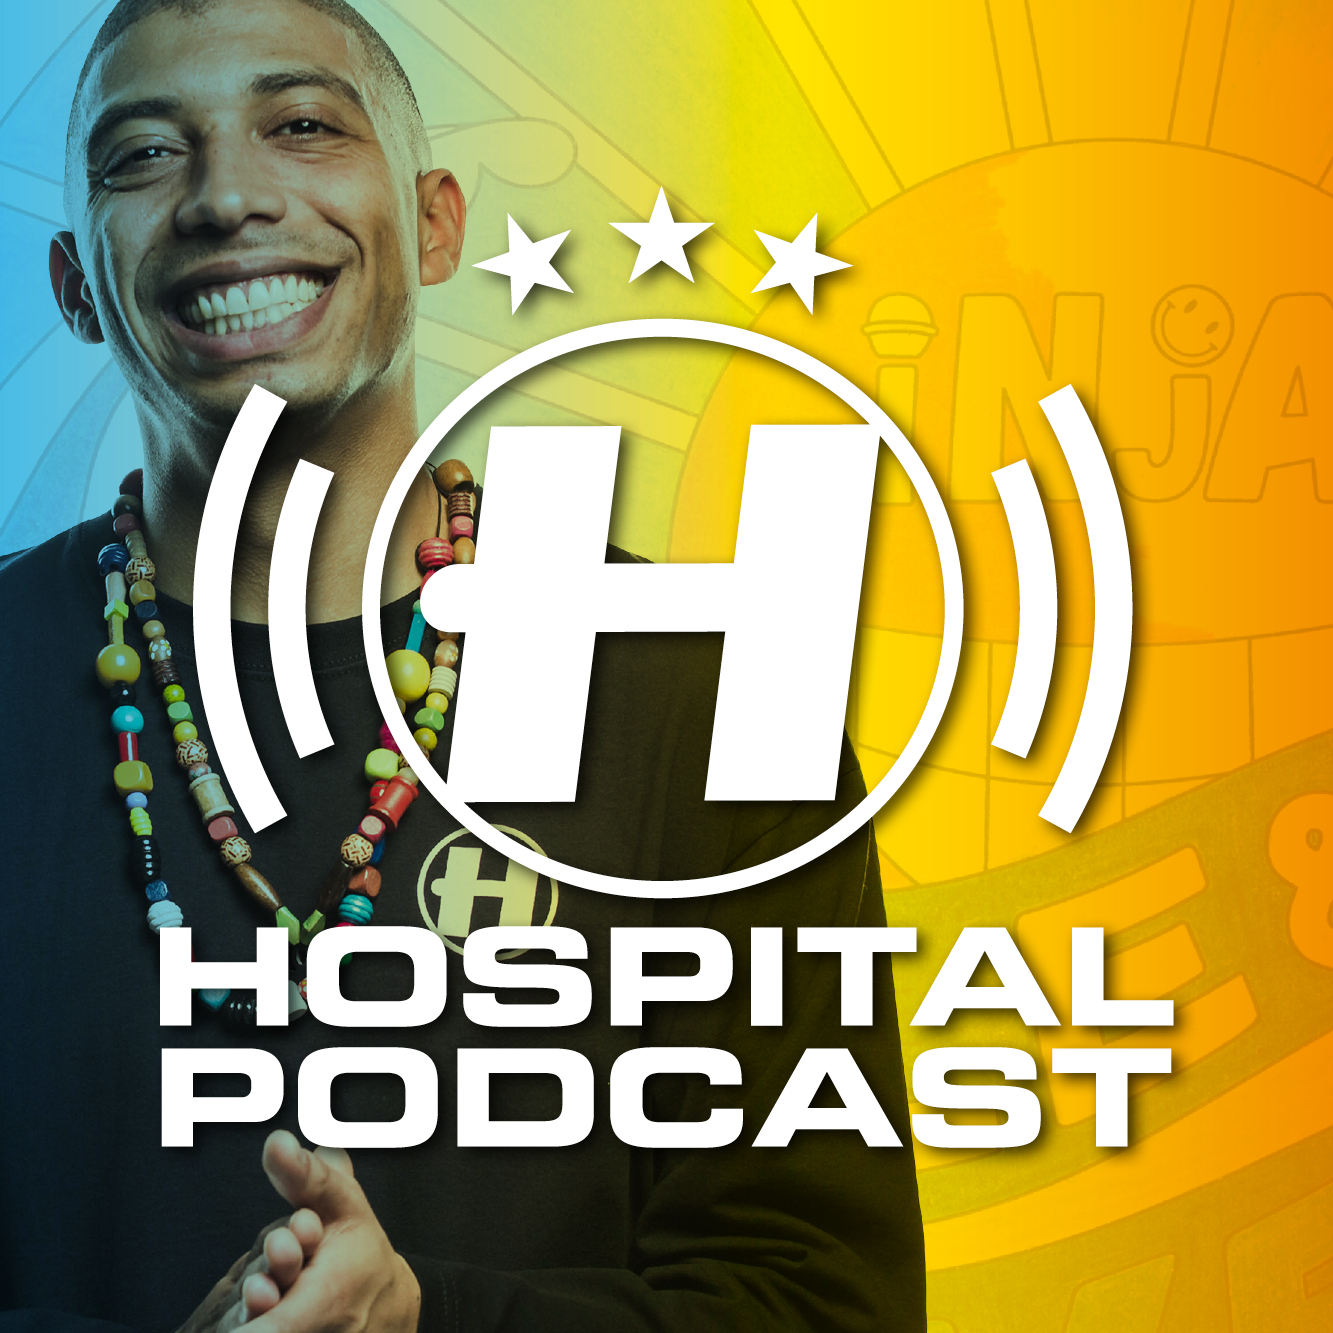 Hospital Podcast 447 with Inja Artwork